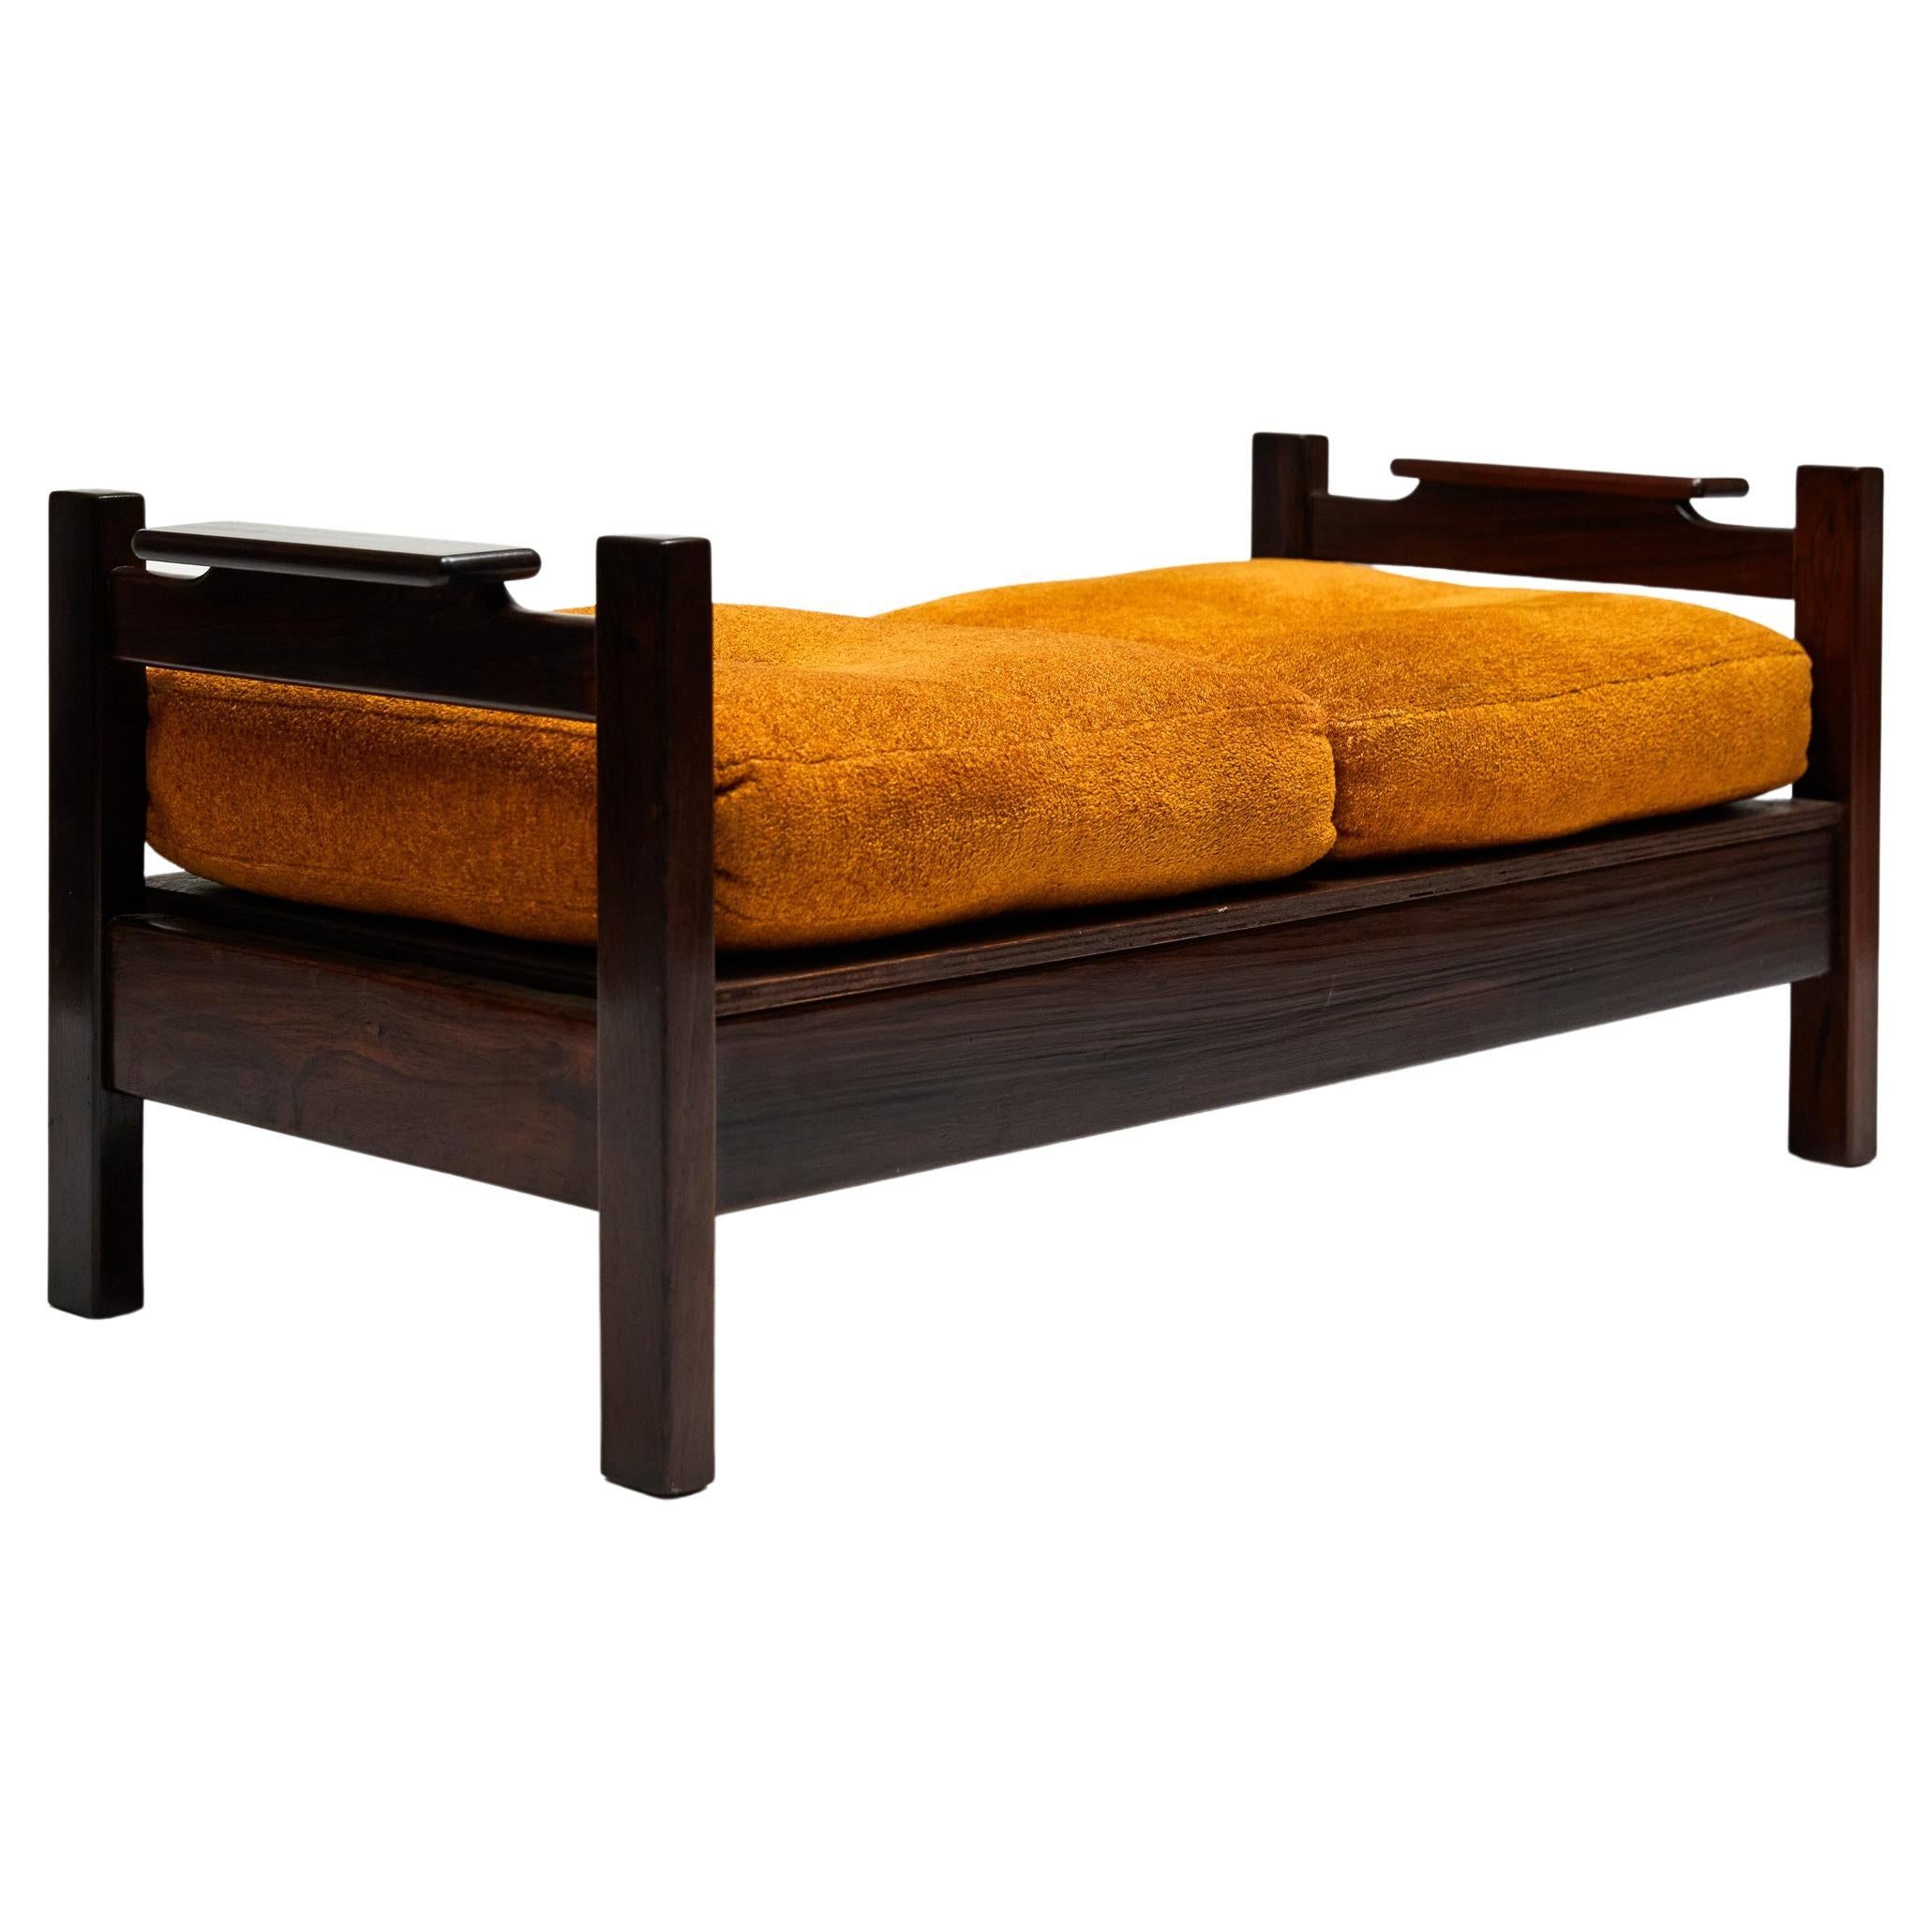 Brazilian Modern Bench in Hardwood & Orange Cushions by Fatima, 1960s, Brazil For Sale